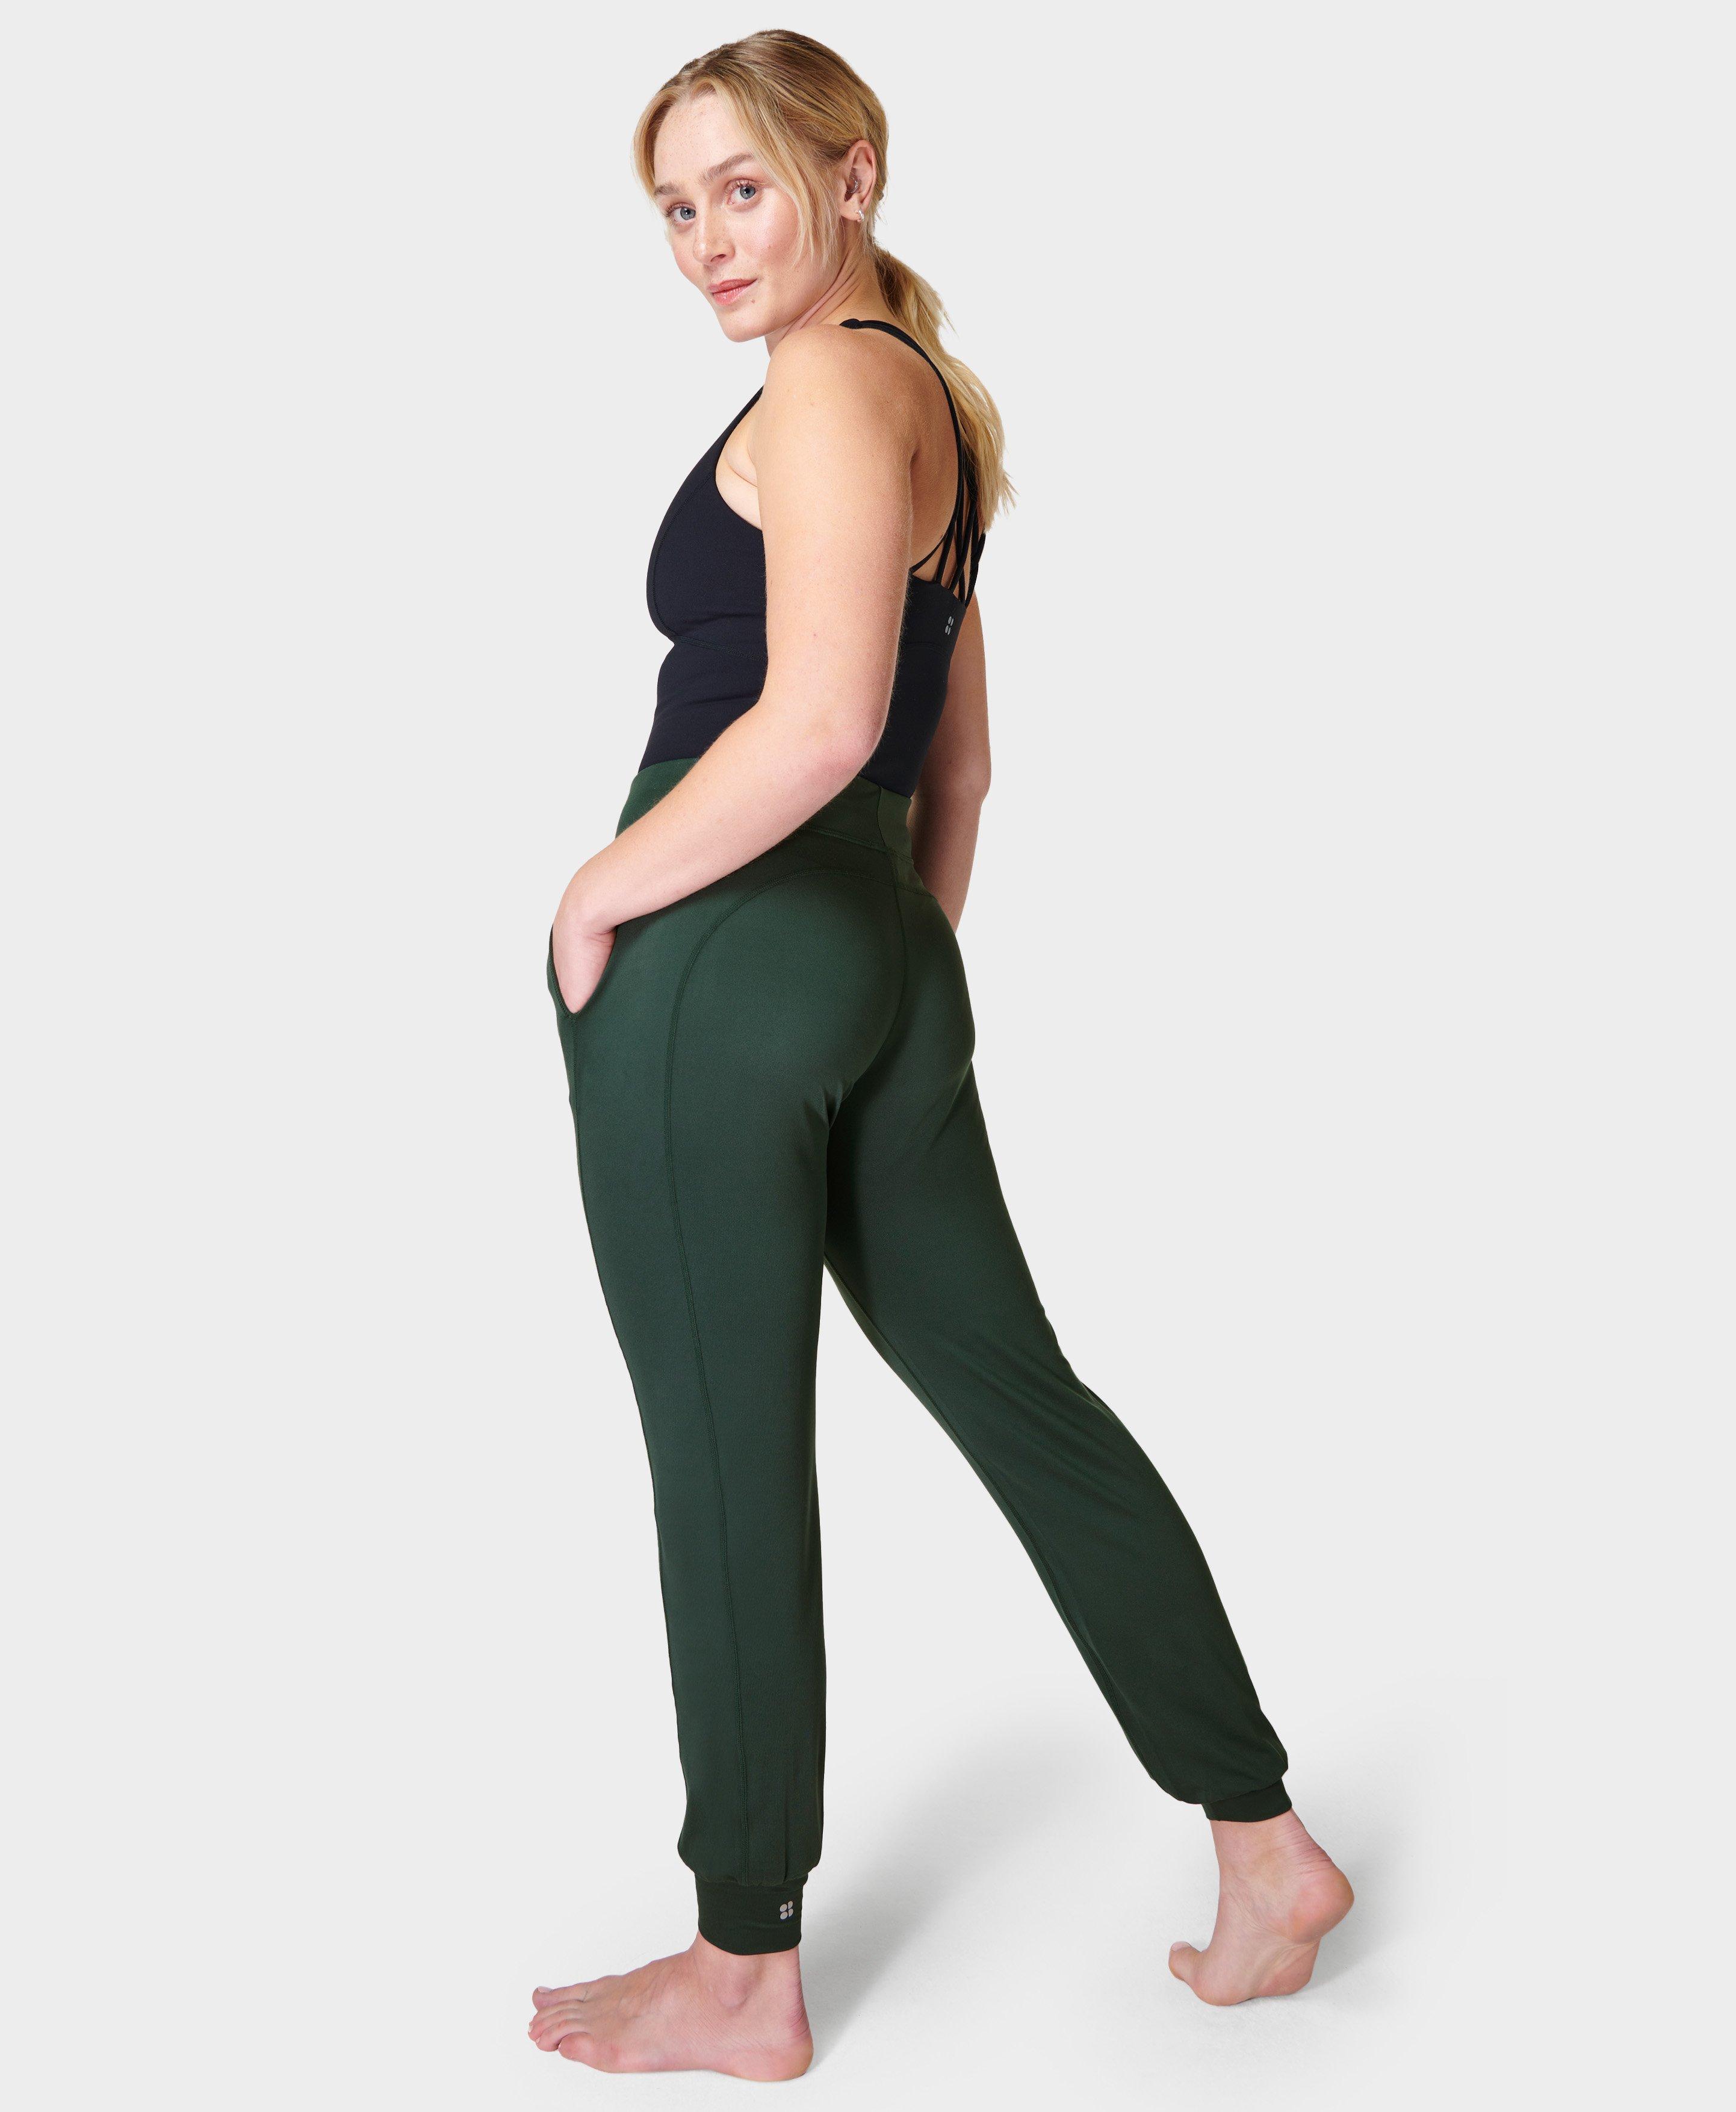 Sweaty Betty Gary 27 Yoga Pants, £90.00